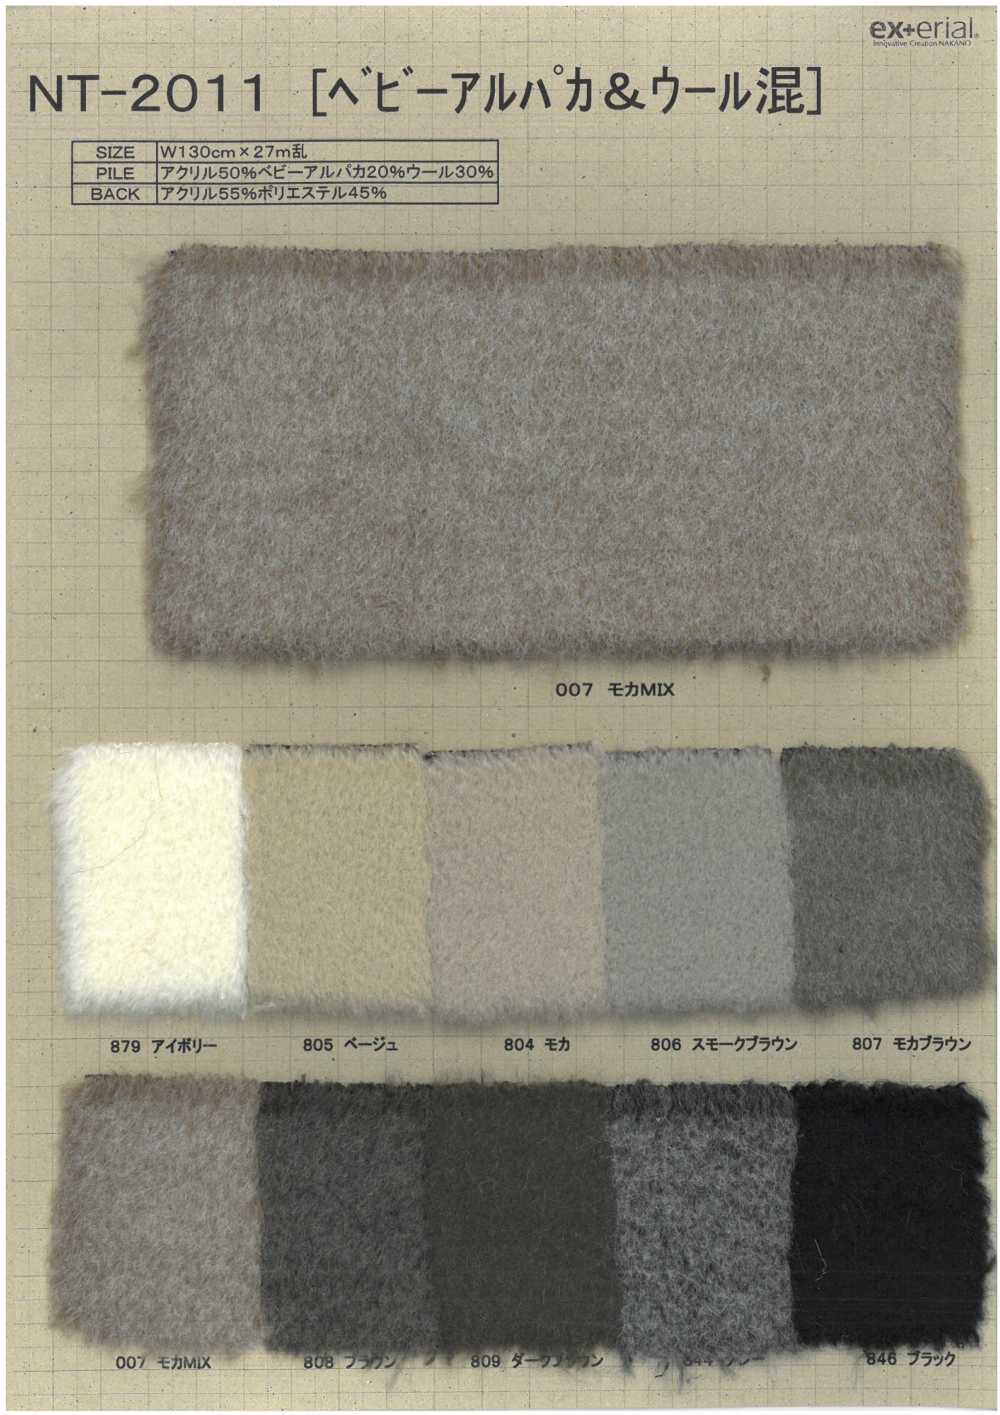 NT-2011 Pele Artesanal [bebê Mistura De Alpaca][Têxtil / Tecido] Indústria De Meias Nakano